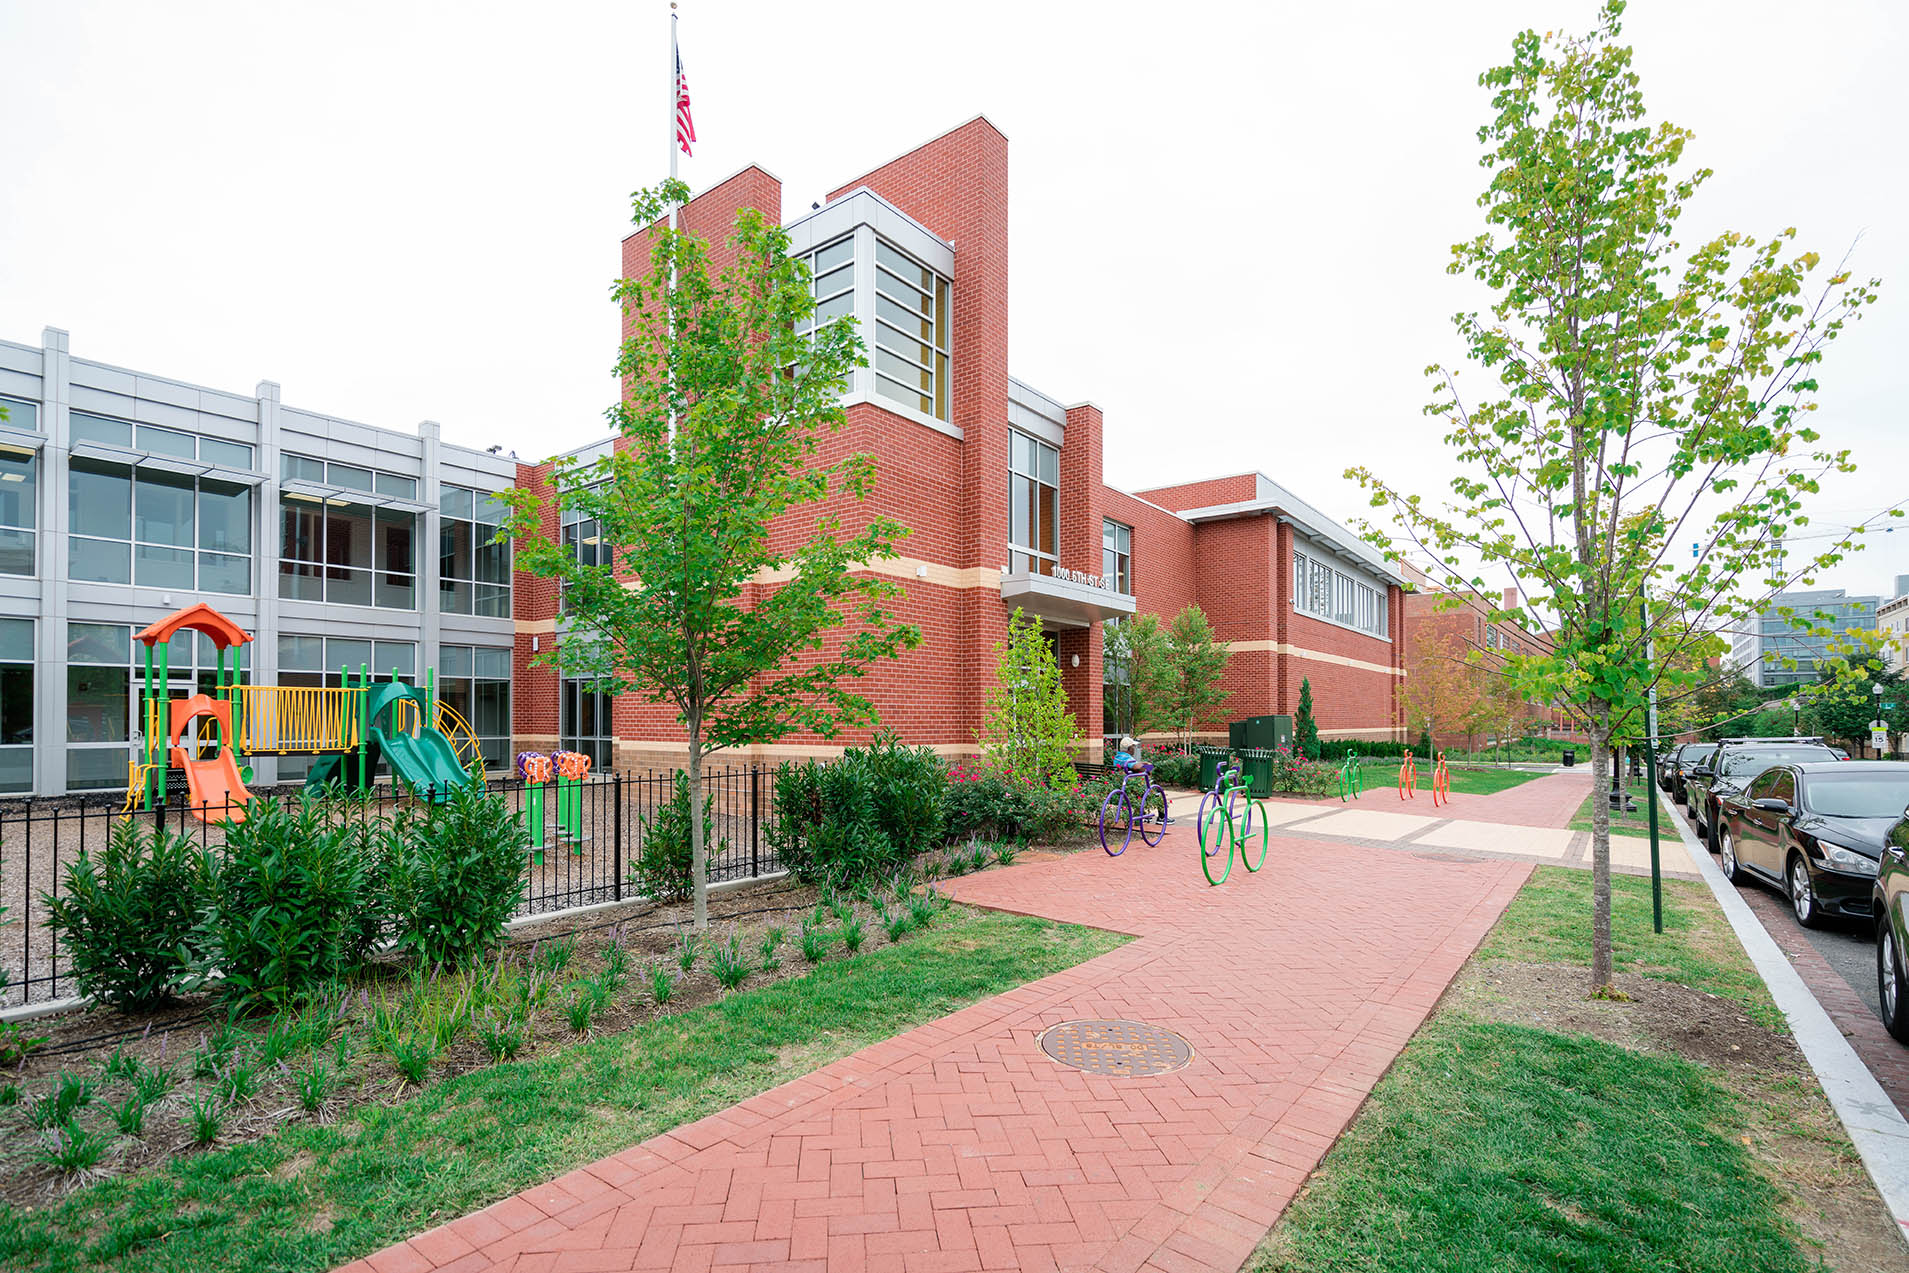 Exterior of a school in Washington DC